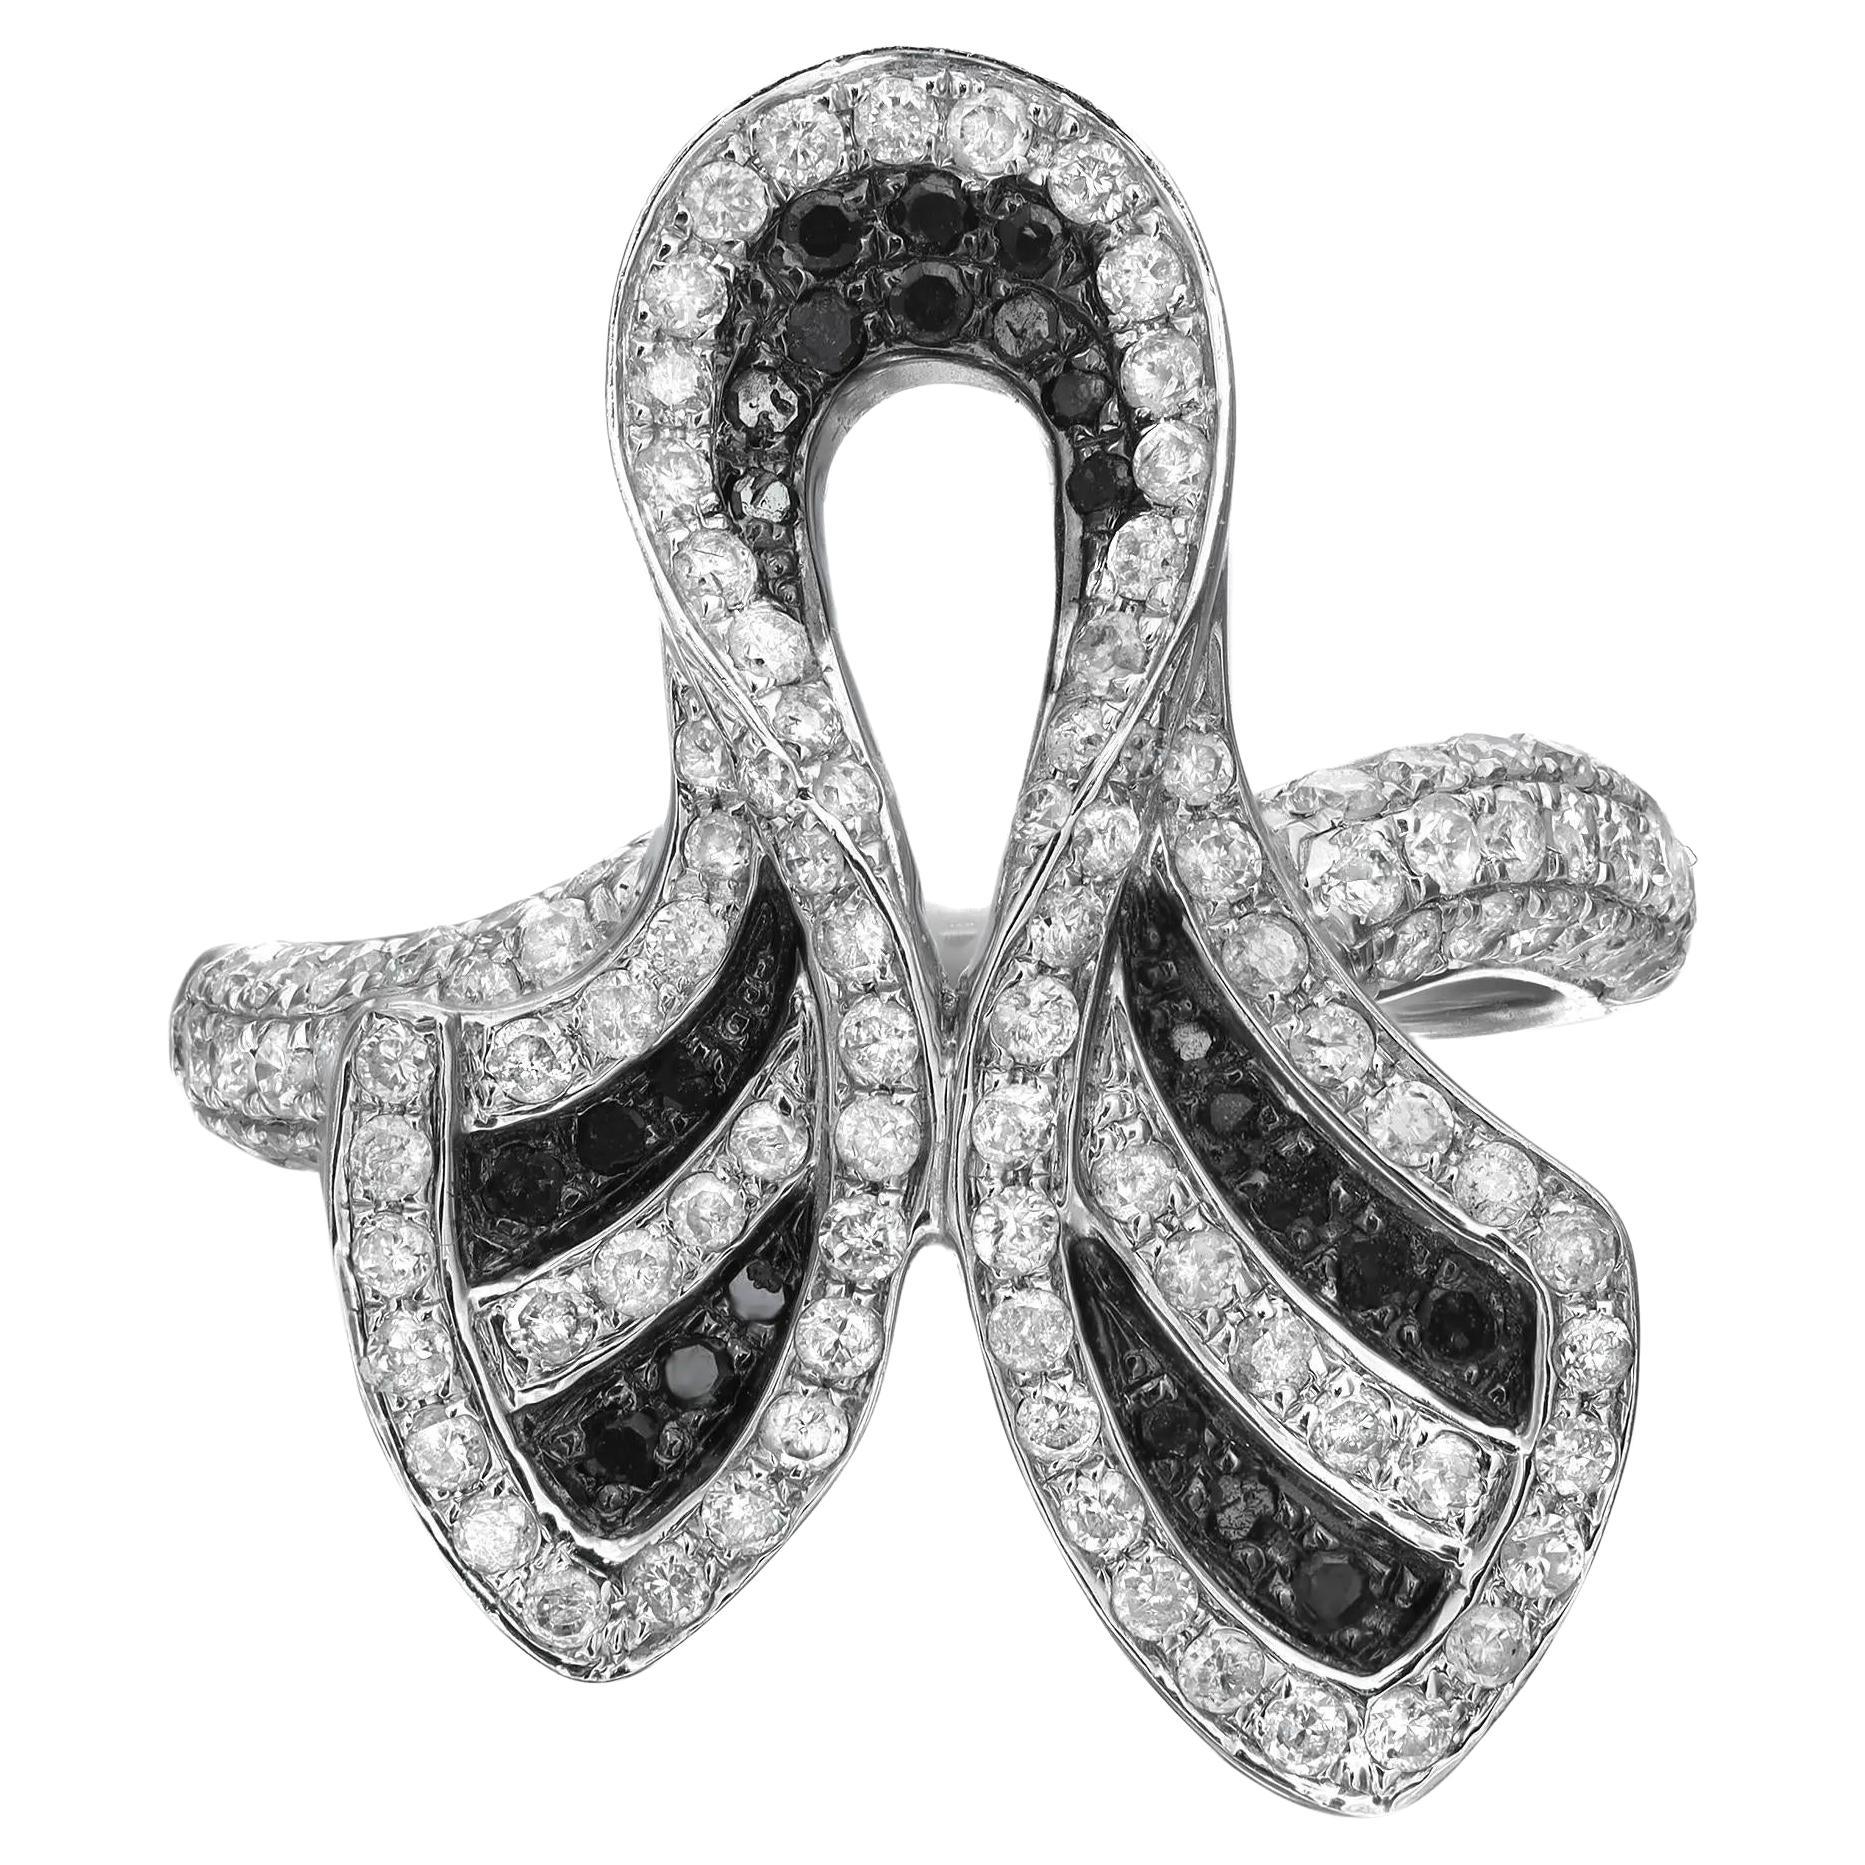 1.16Cttw White and Black Diamond Ladies Cocktail Ring 14K White Gold Size 7.5  en vente